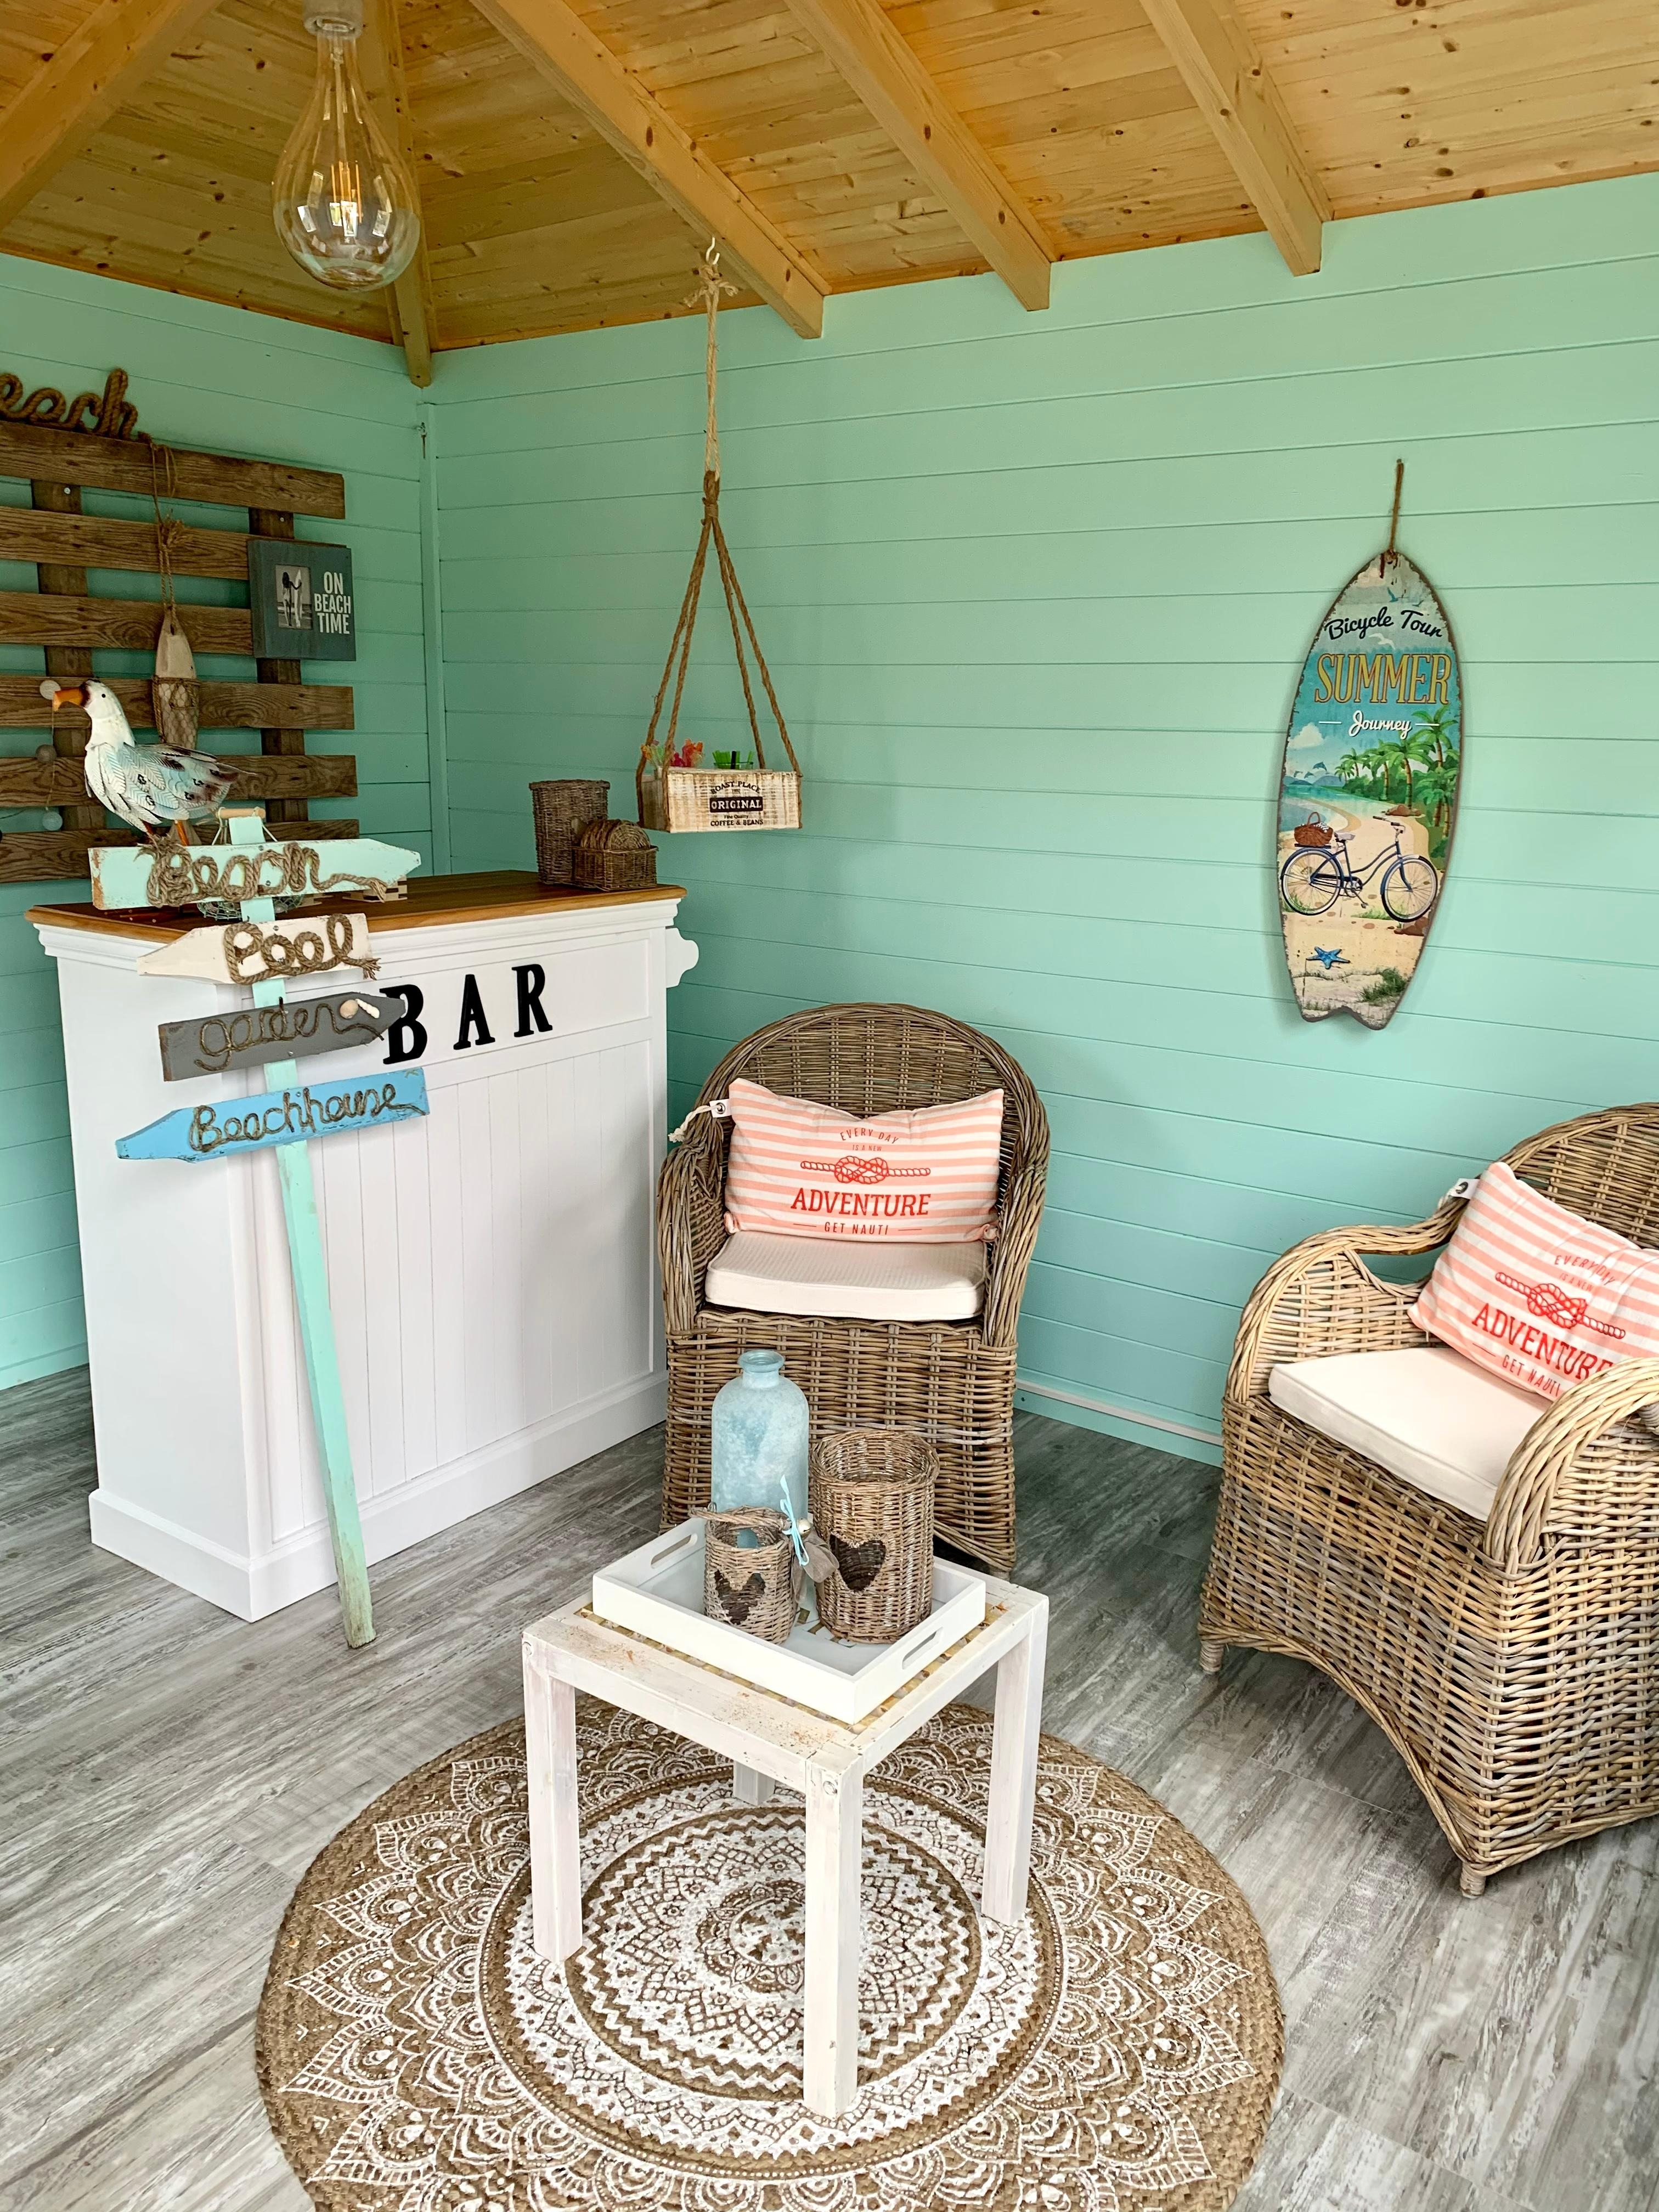 Unsere Beachhütte im Garten ist ready for summer #beachhouse #beachhousestyle #coastalhome #coastalliving